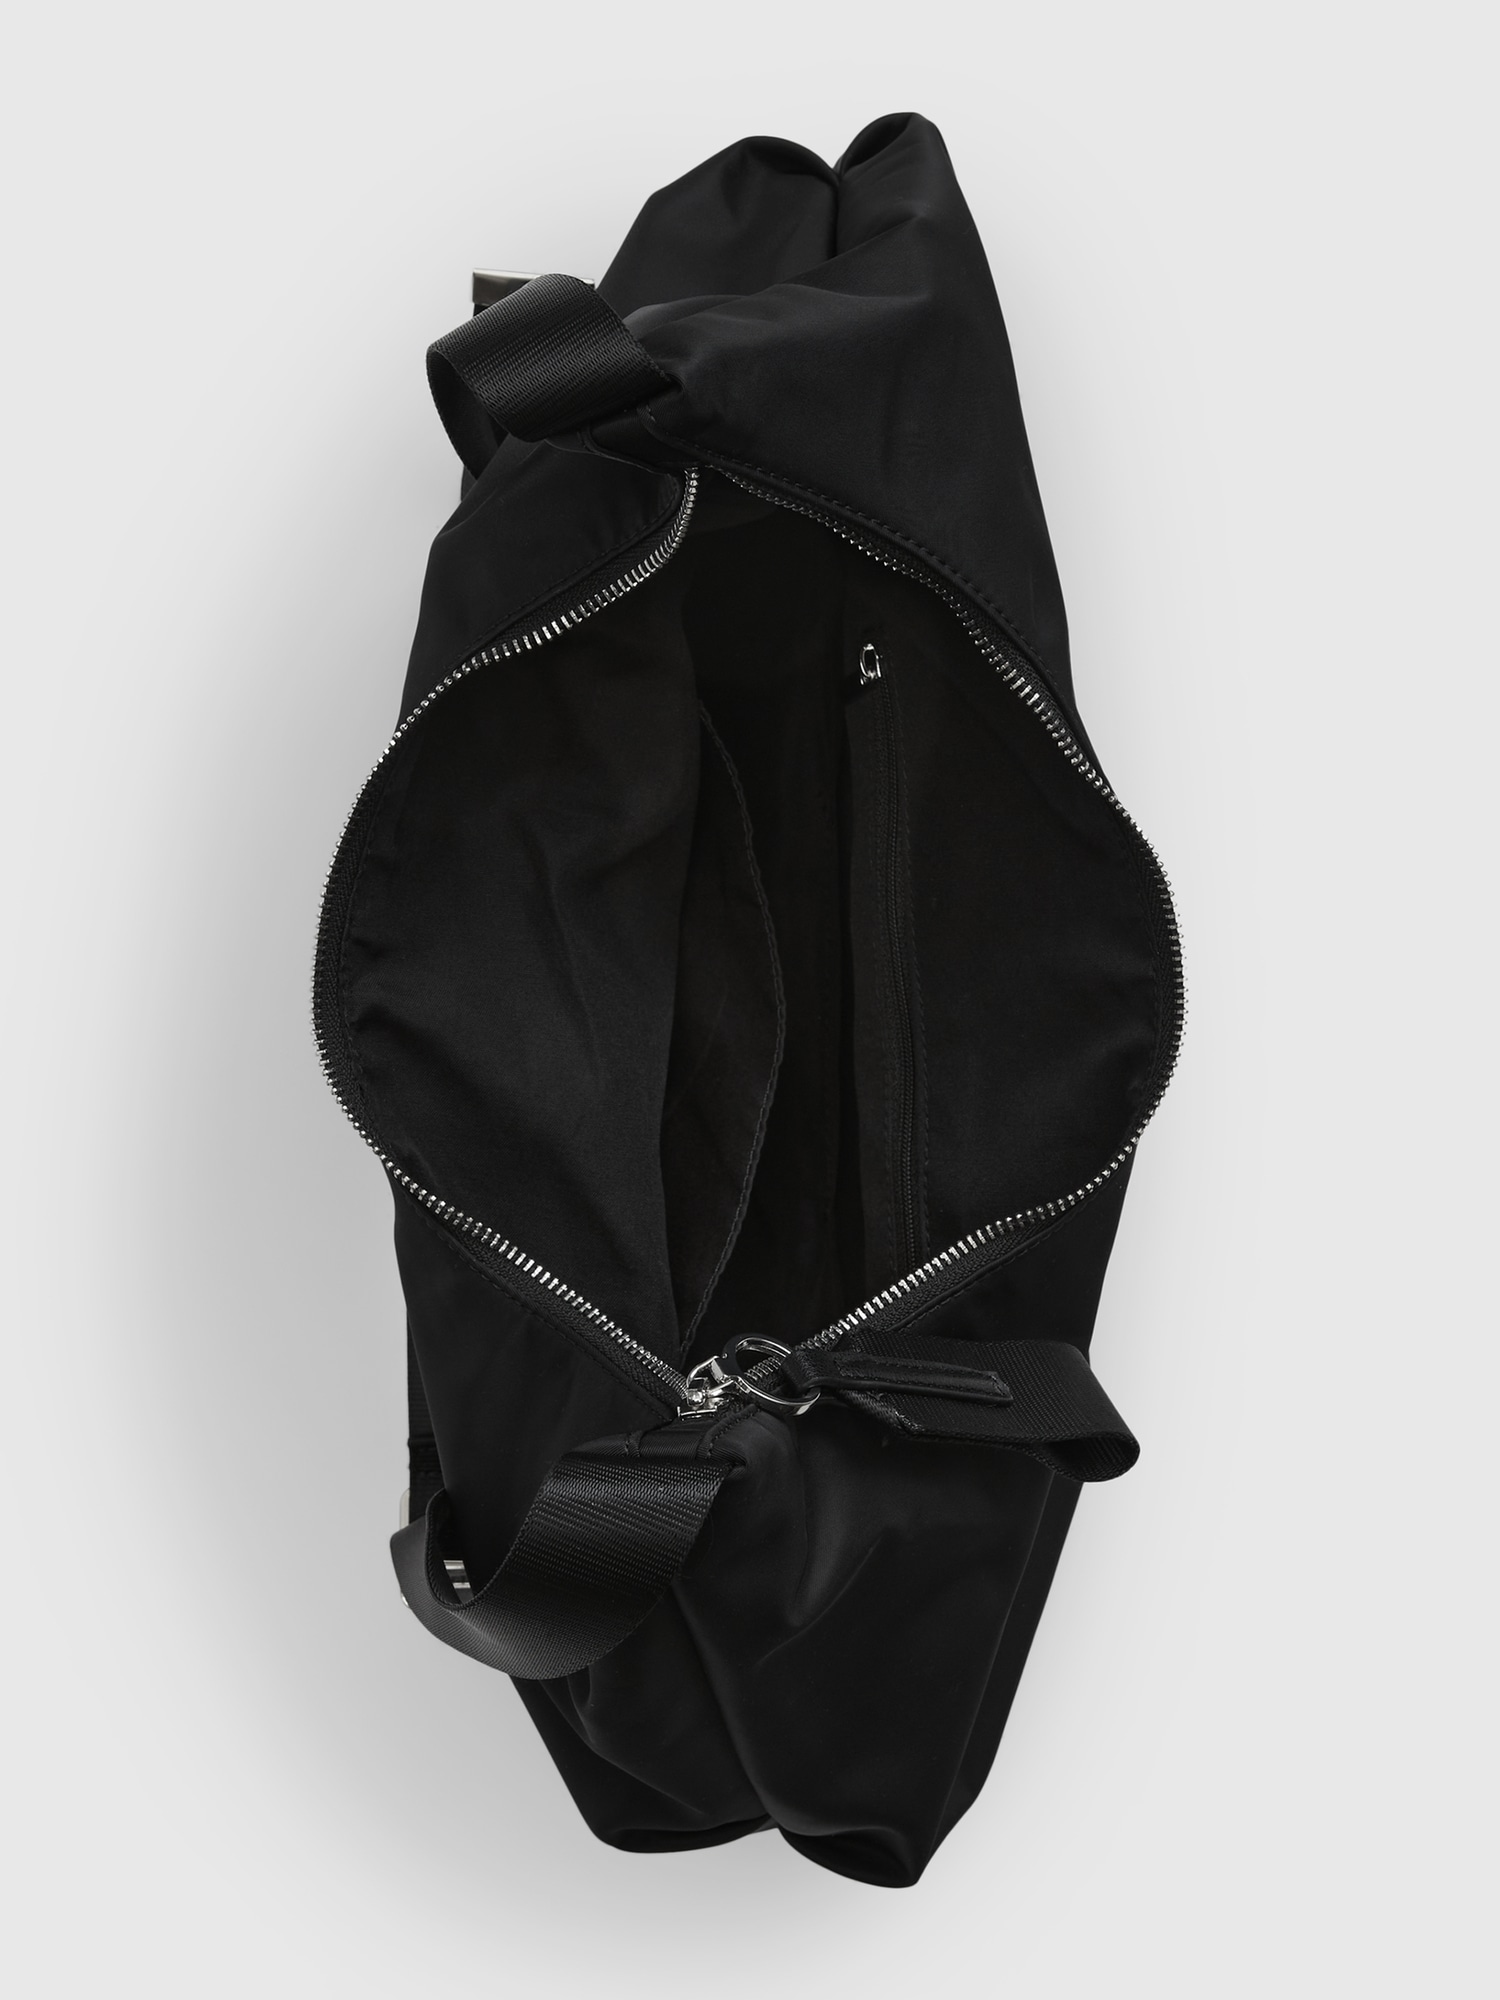 Nylon Sling Bag | Gap